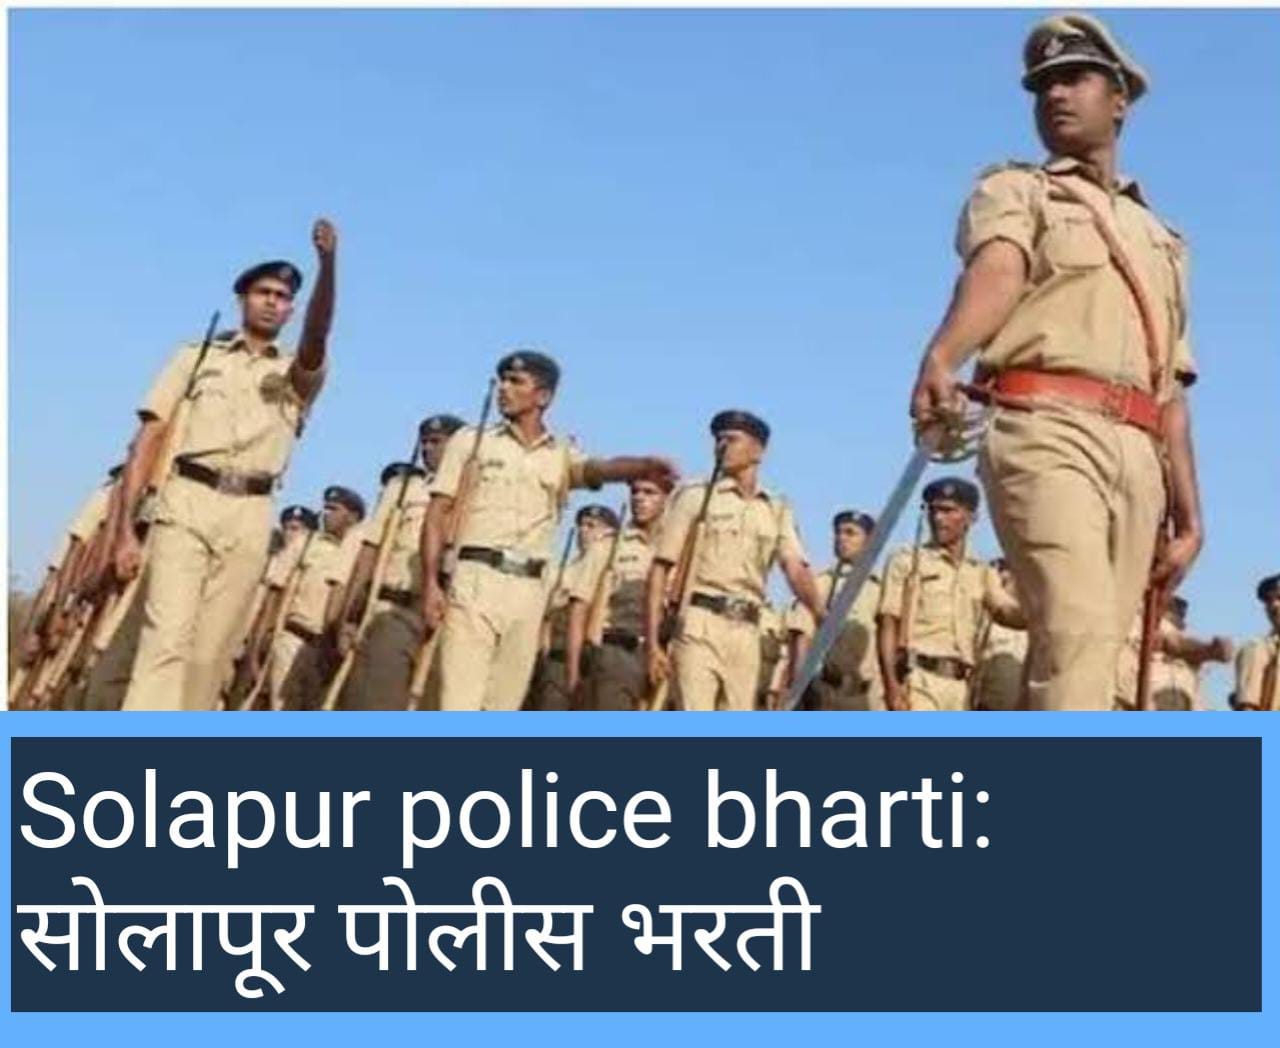 Solapur police bharti